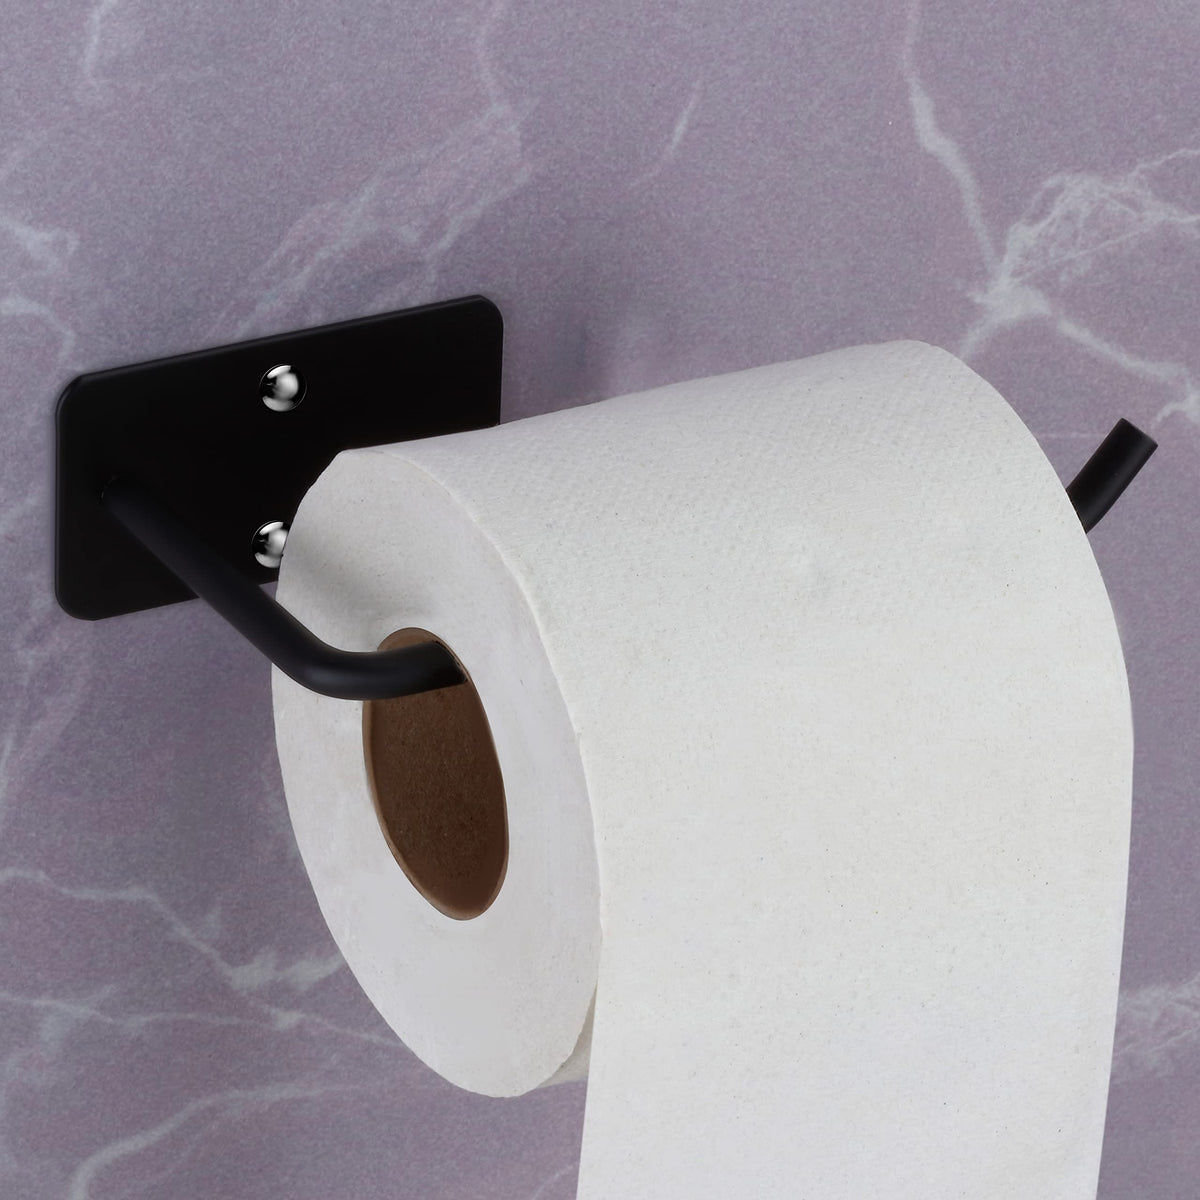 Plantex Stainless Steel Toilet Paper Roll Holder/Tissue Paper Holder in Bathroom/Kitchen/Bathroom Accessories - Wall Mount (Black)